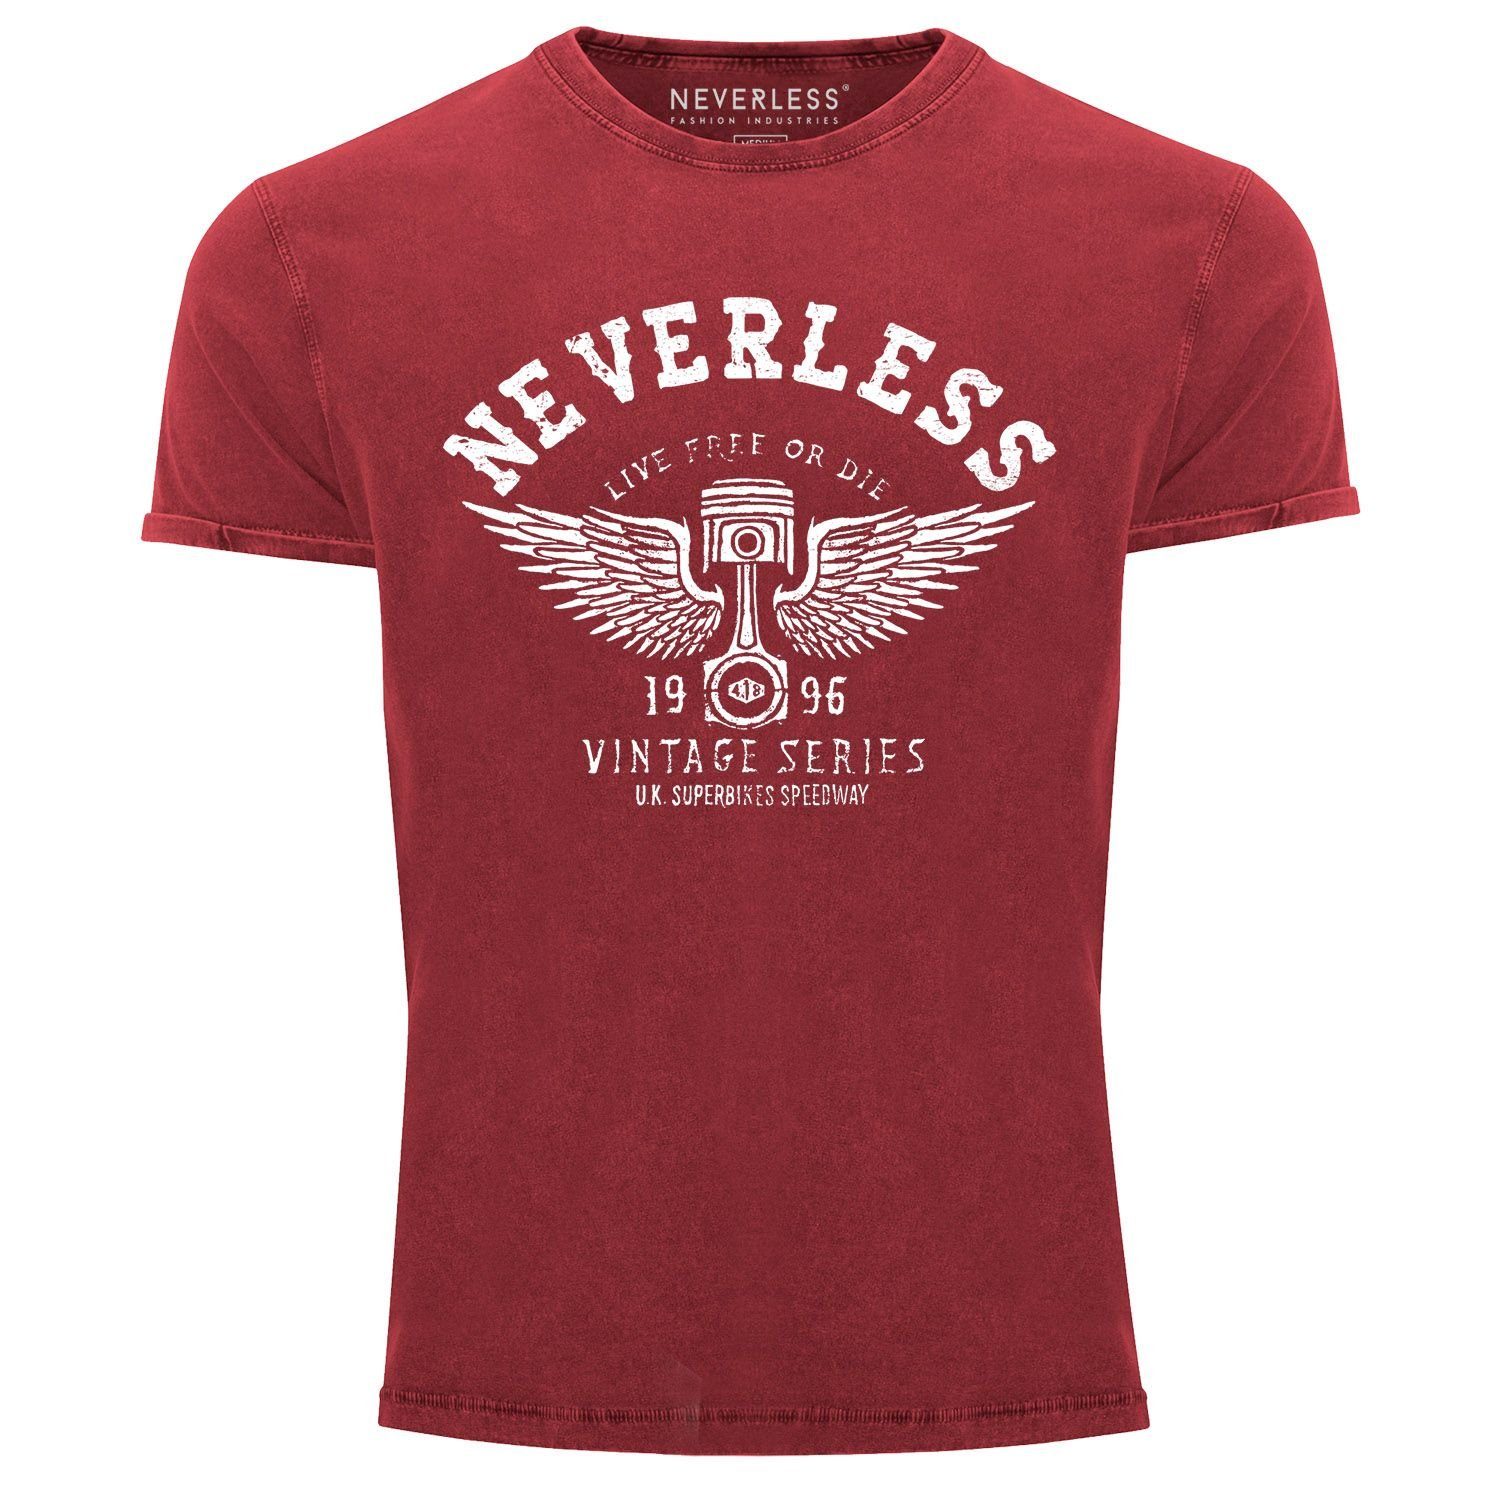 Neverless Print-Shirt Cooles Angesagtes Herren T-Shirt Vintage Shirt Retro Auto Kolben Used Look Slim Fit Neverless® mit Print rot | T-Shirts